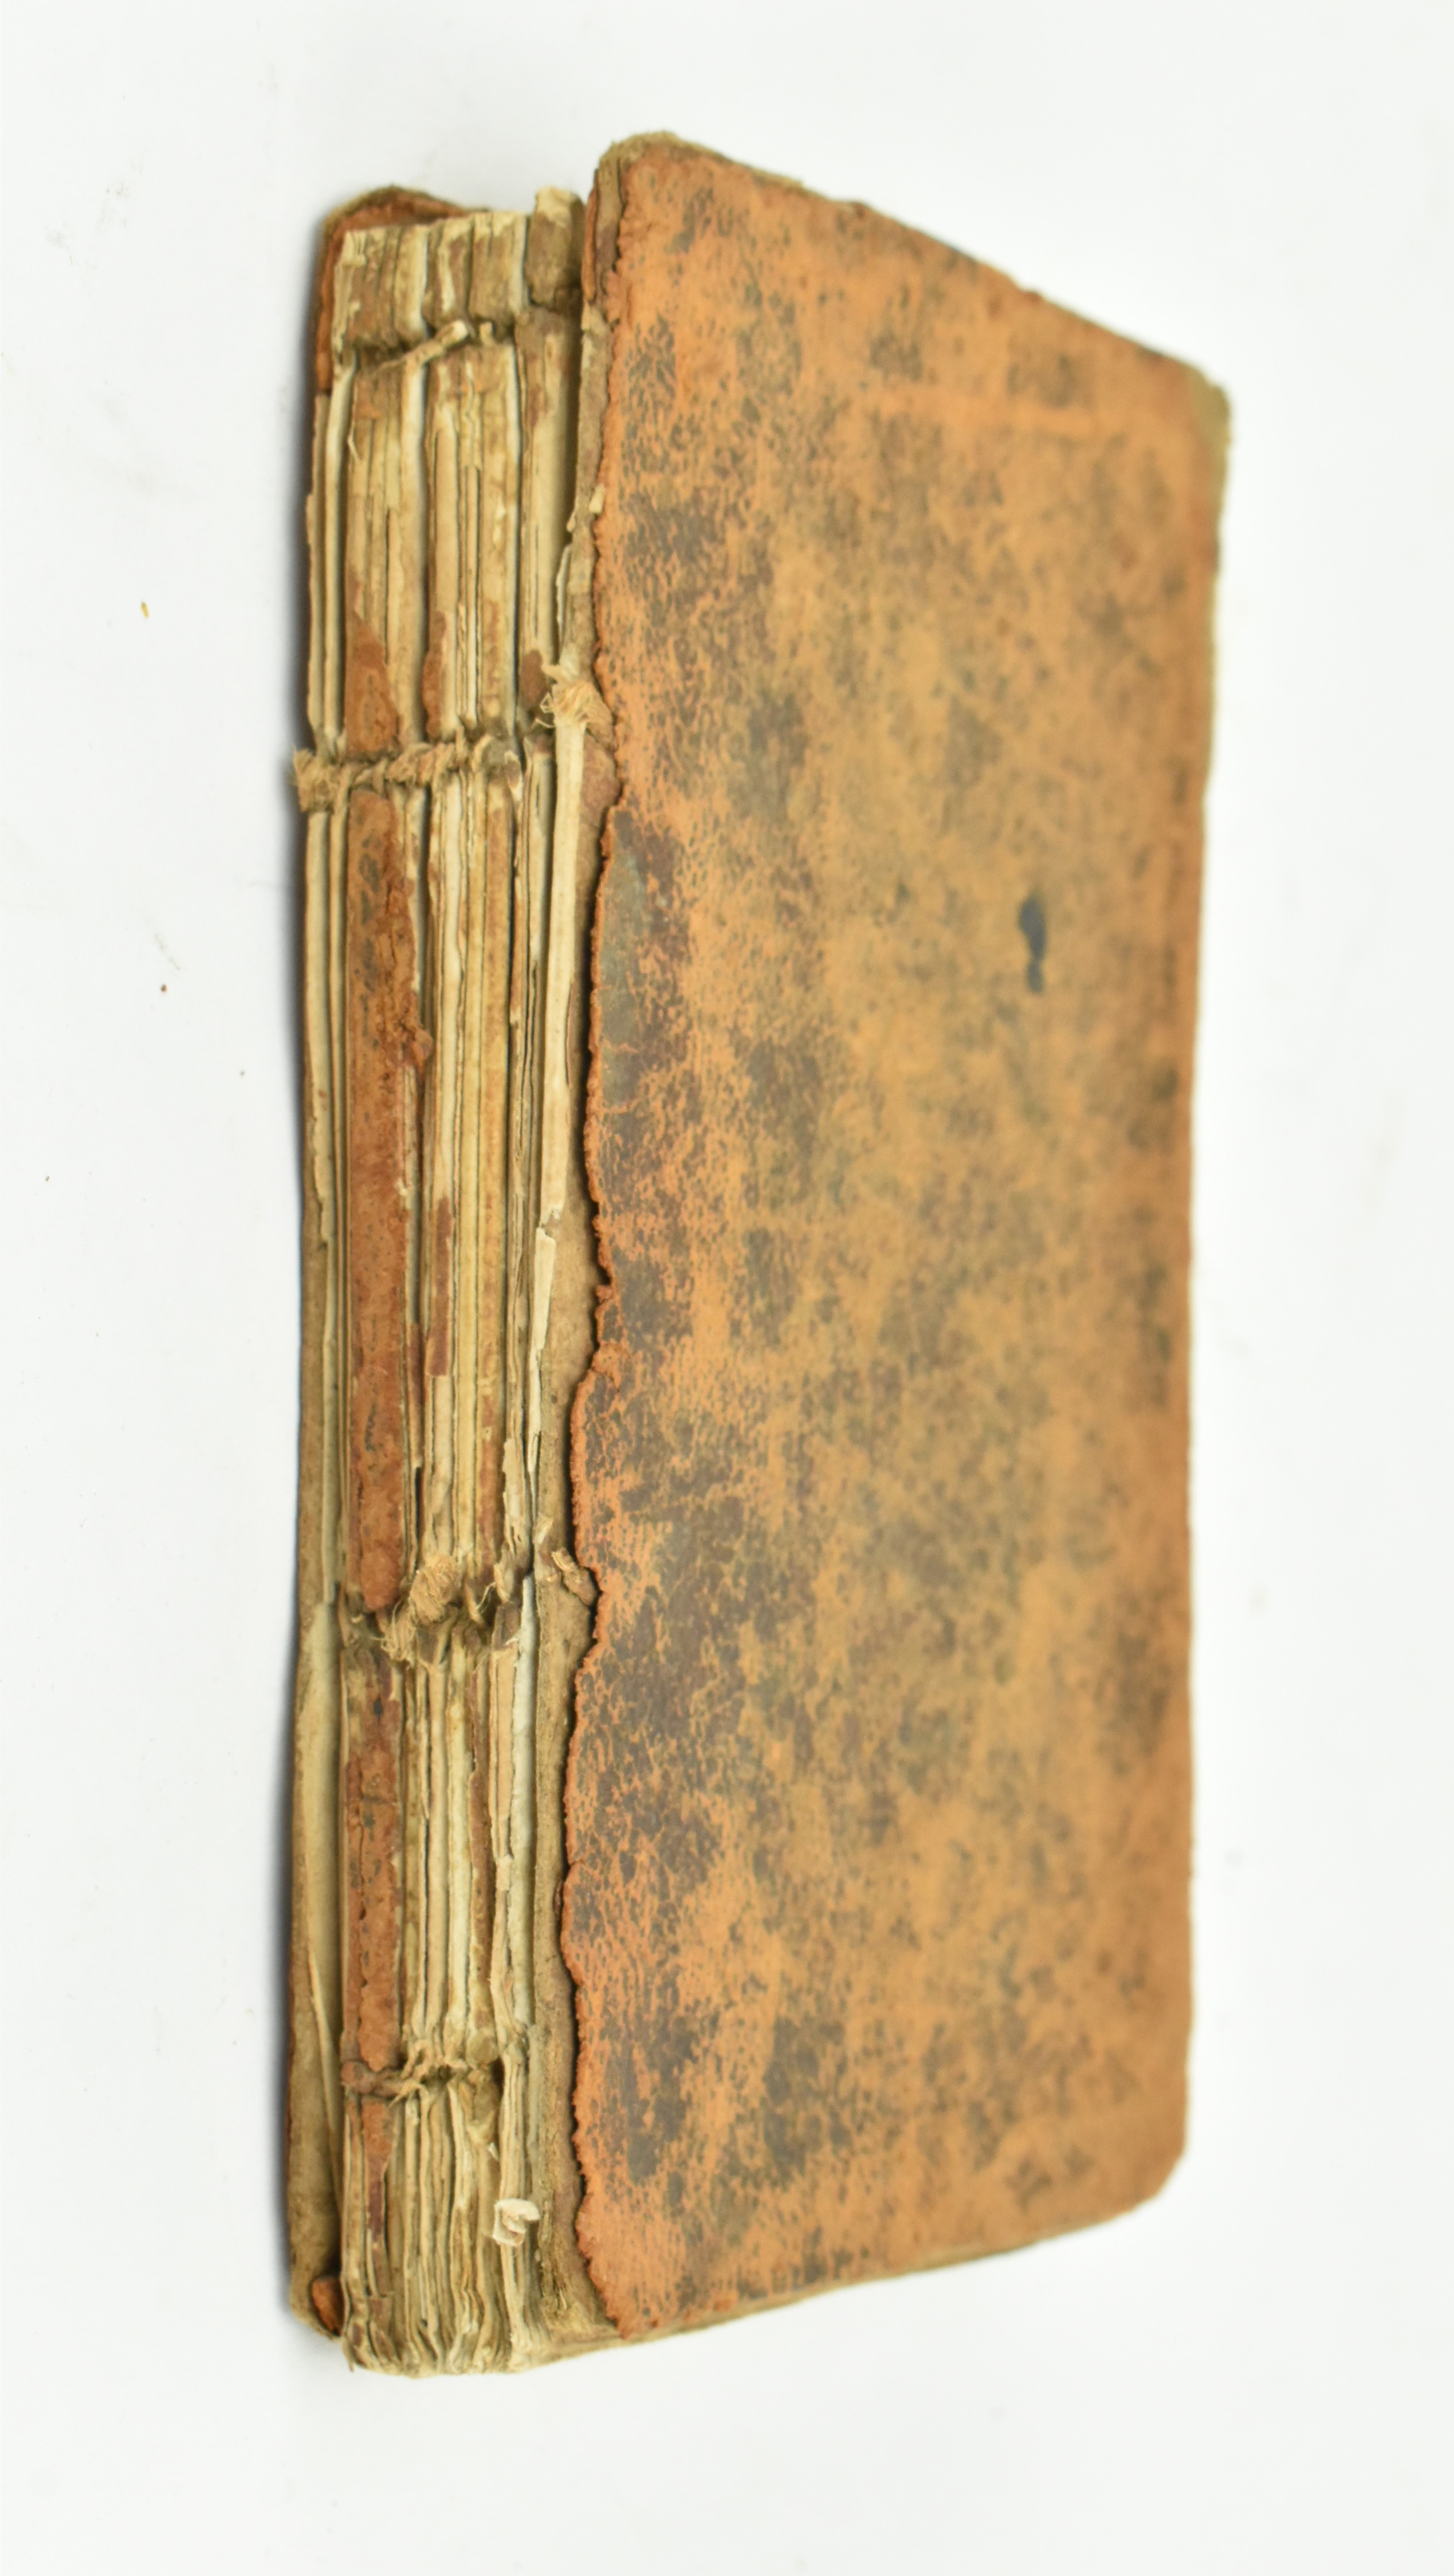 1819 ROBINSON CRUSOE - CENTENARY EDITION IN CONTEMP. SHEEPSKIN - Image 2 of 7